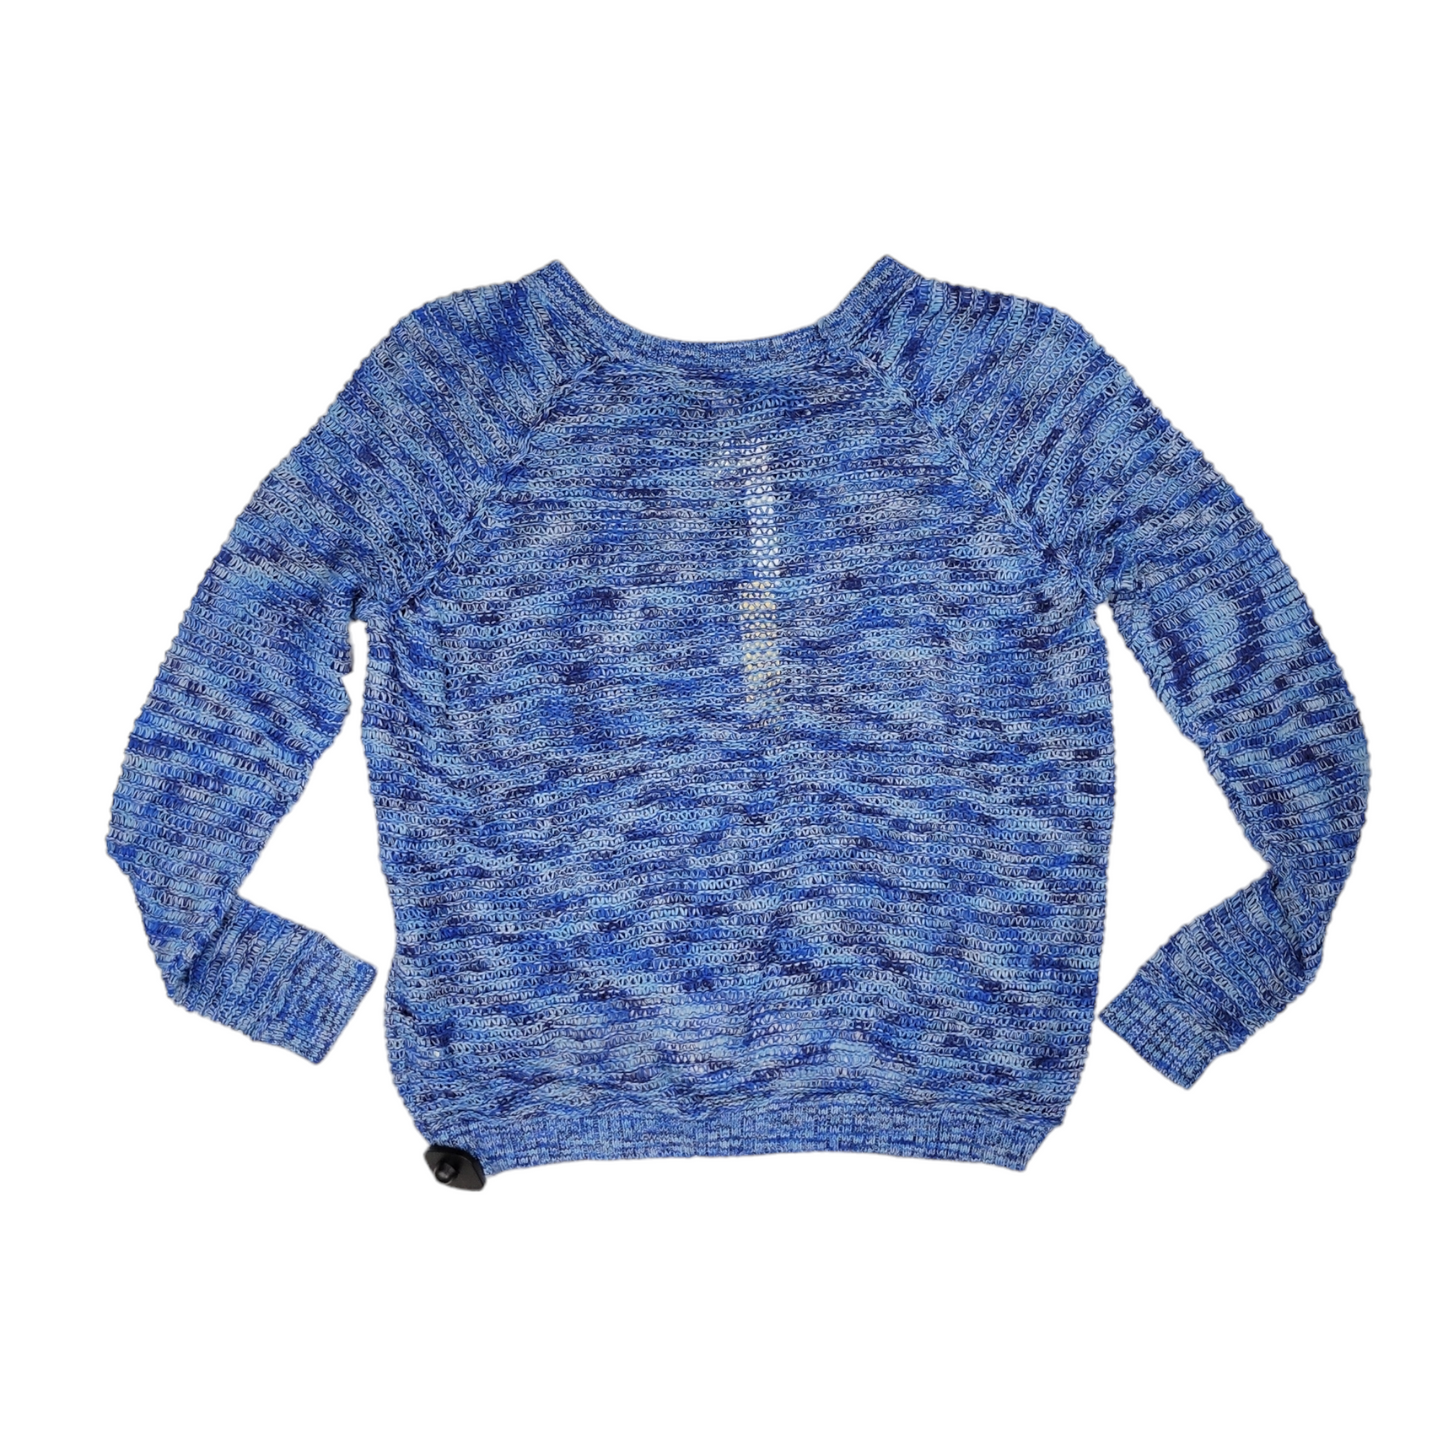 Sweater By lauren conrad  Size: Xl